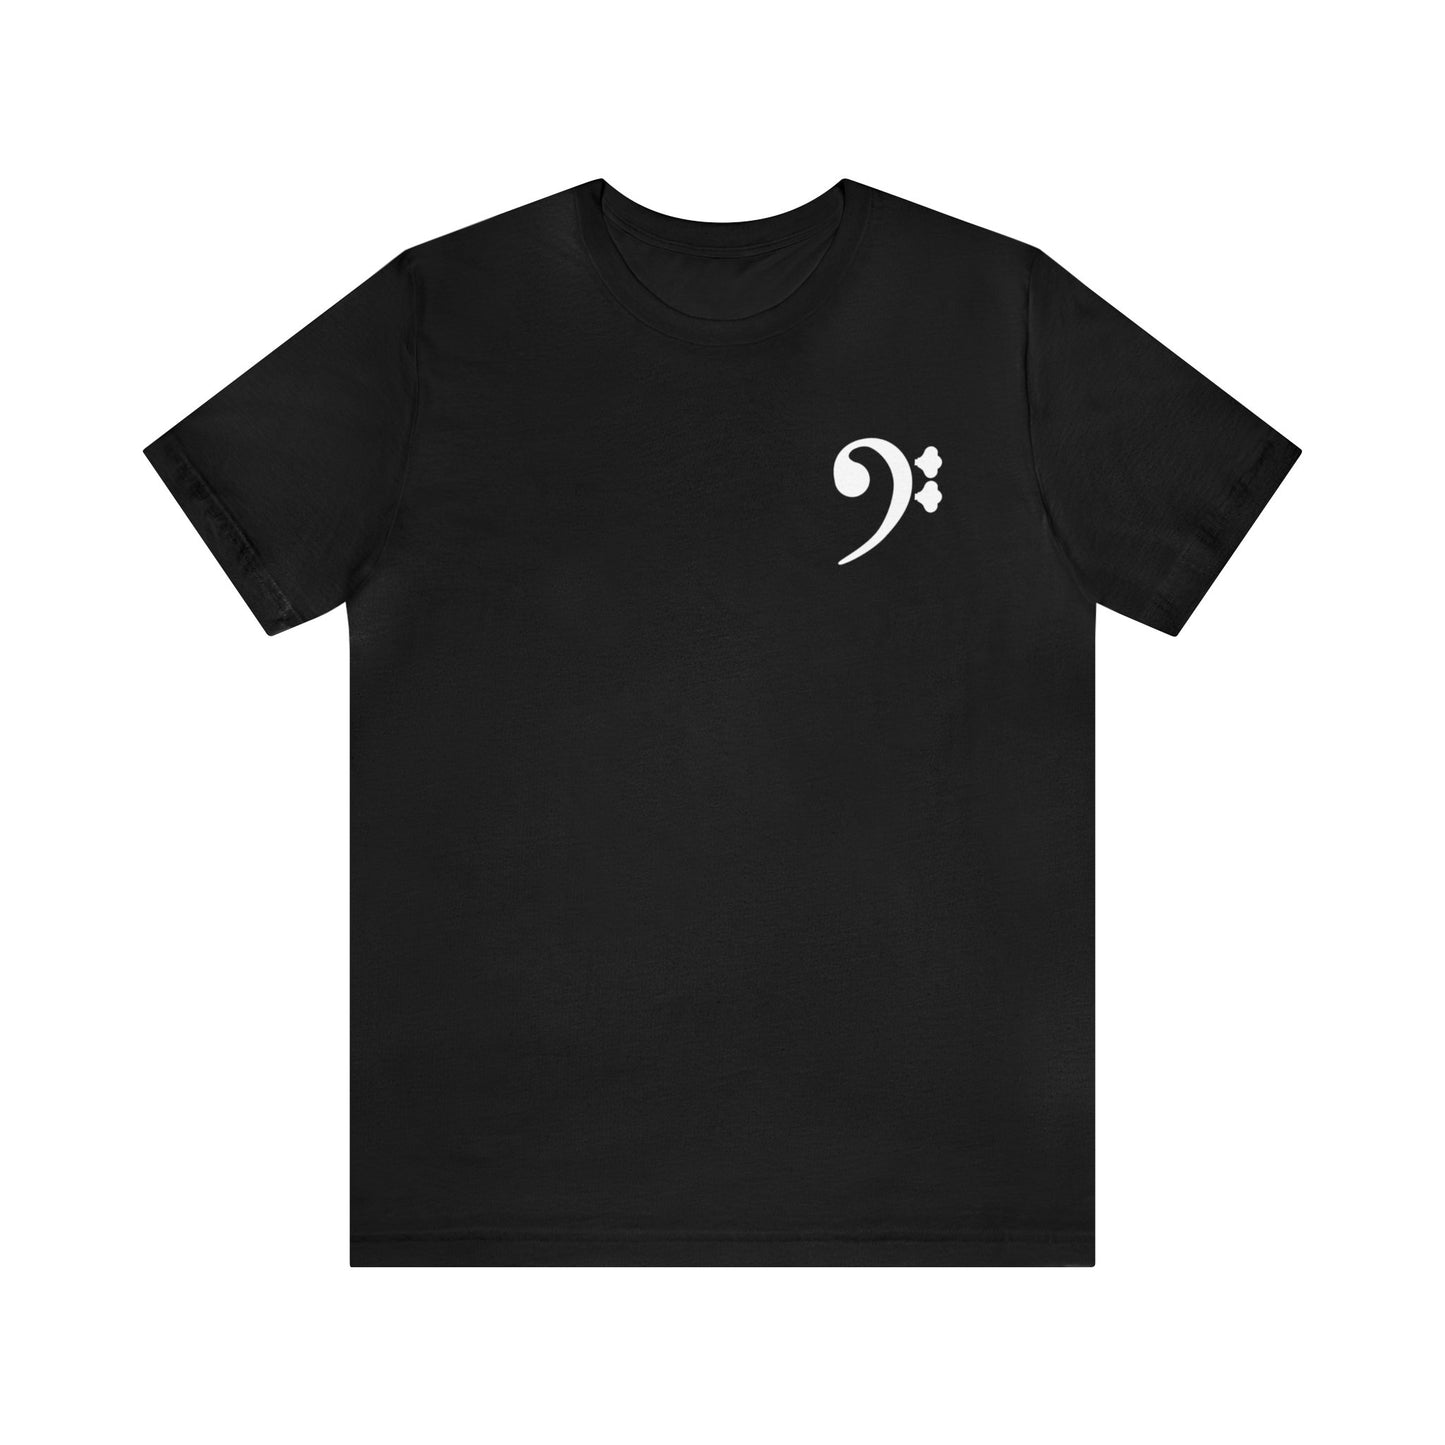 Bass essentials T-shirt in black (unisex) by Xavier Foley